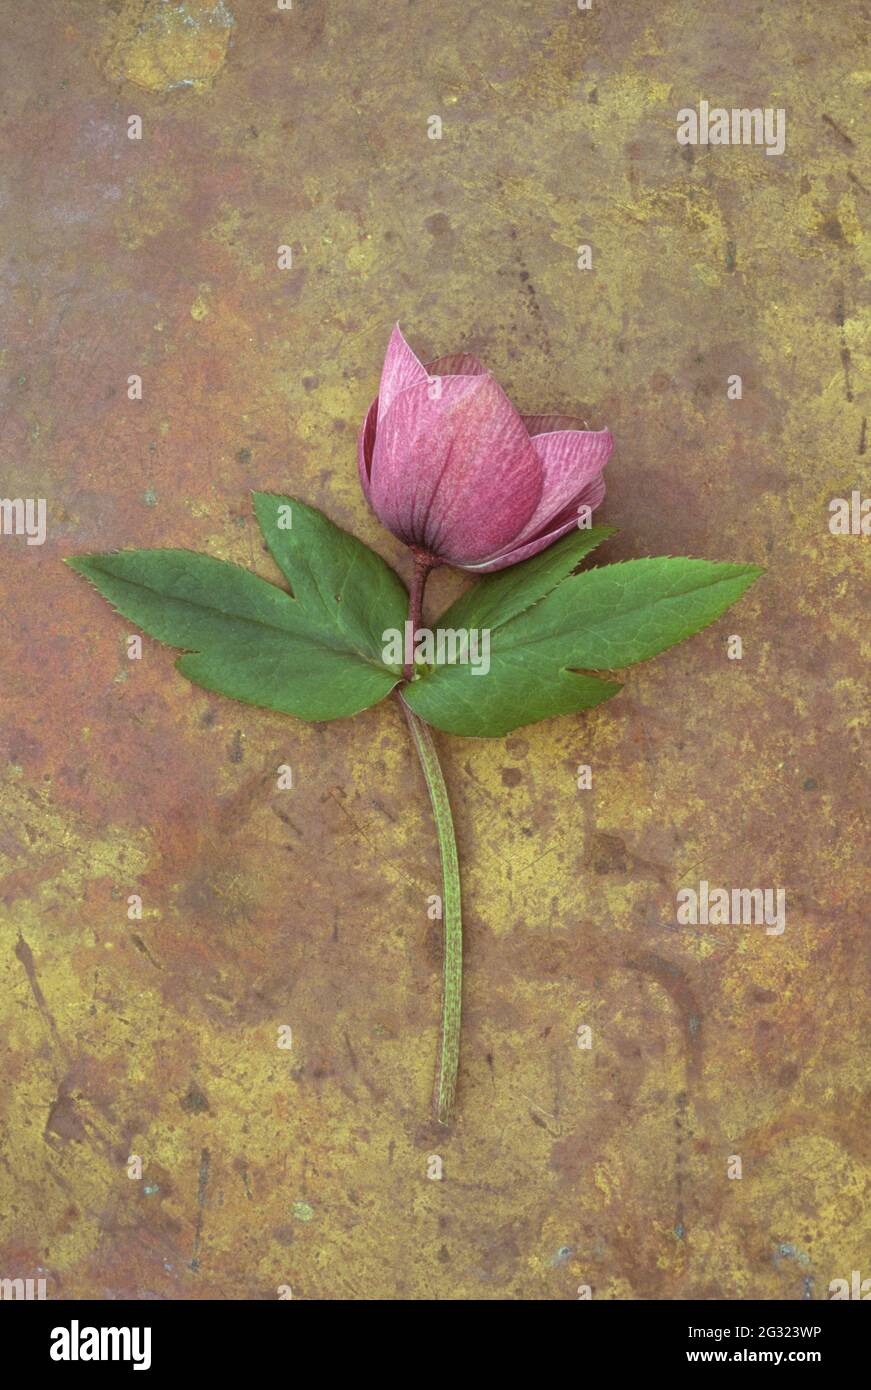 Single stem and half-open flower bud of Lenten rose or Helleborus oprientalis lying on tarnished brass Stock Photo